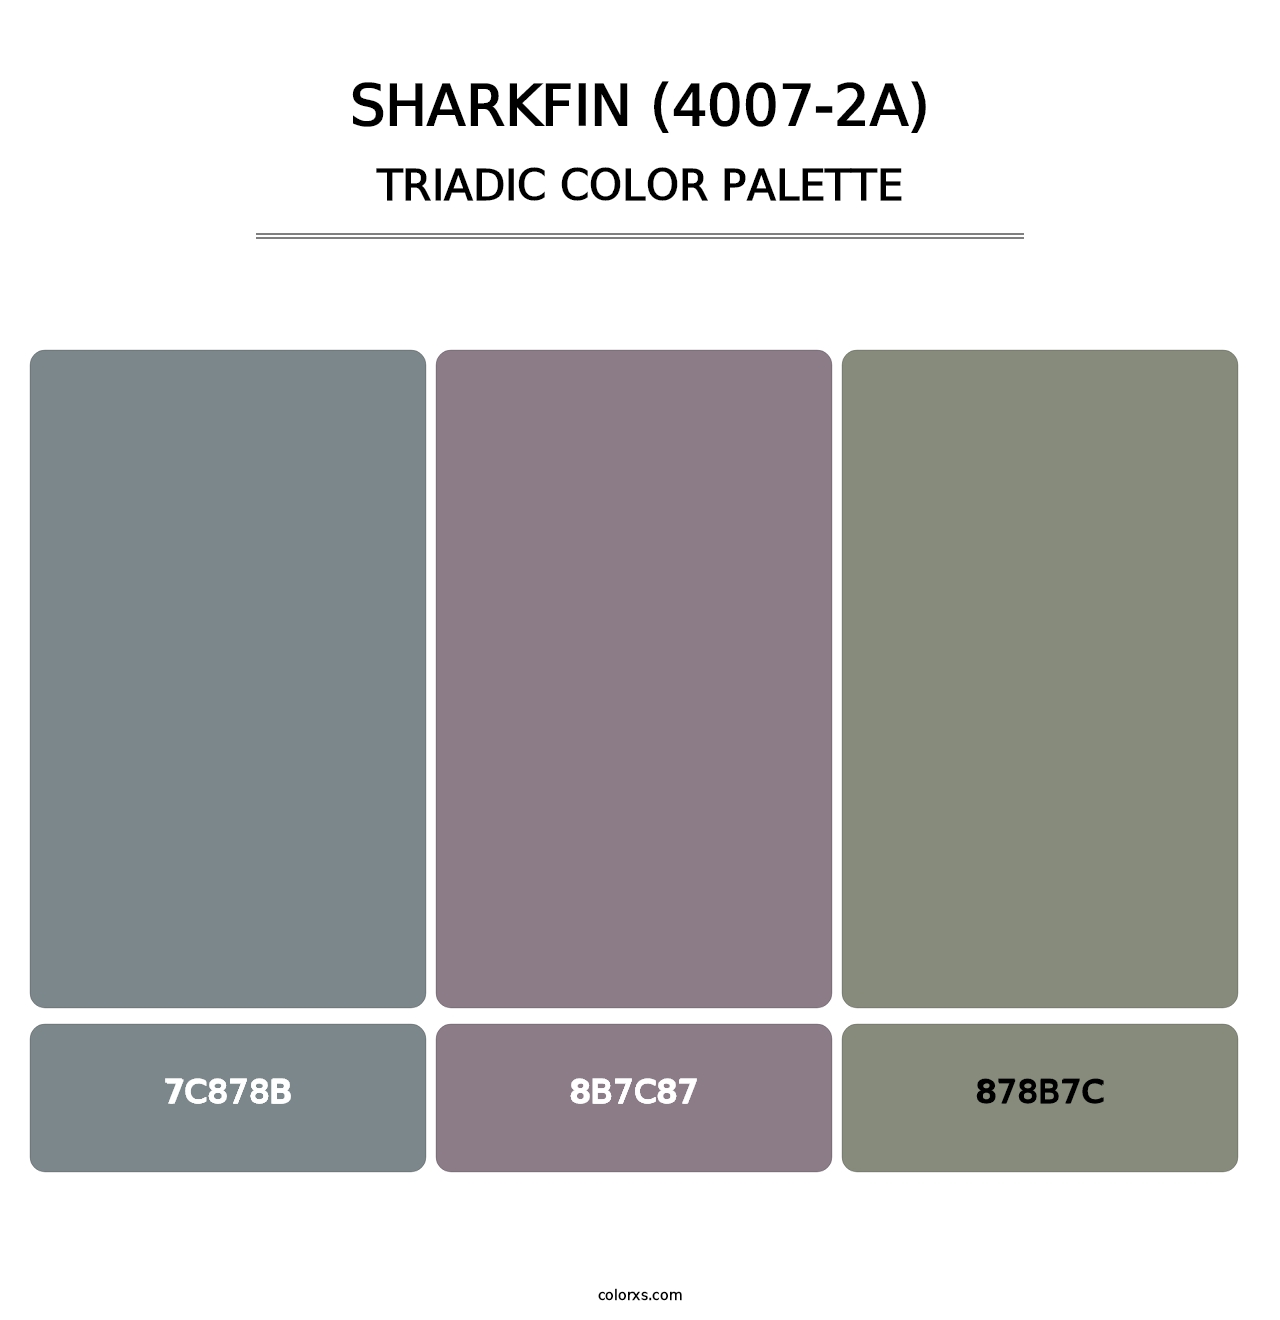 Sharkfin (4007-2A) - Triadic Color Palette